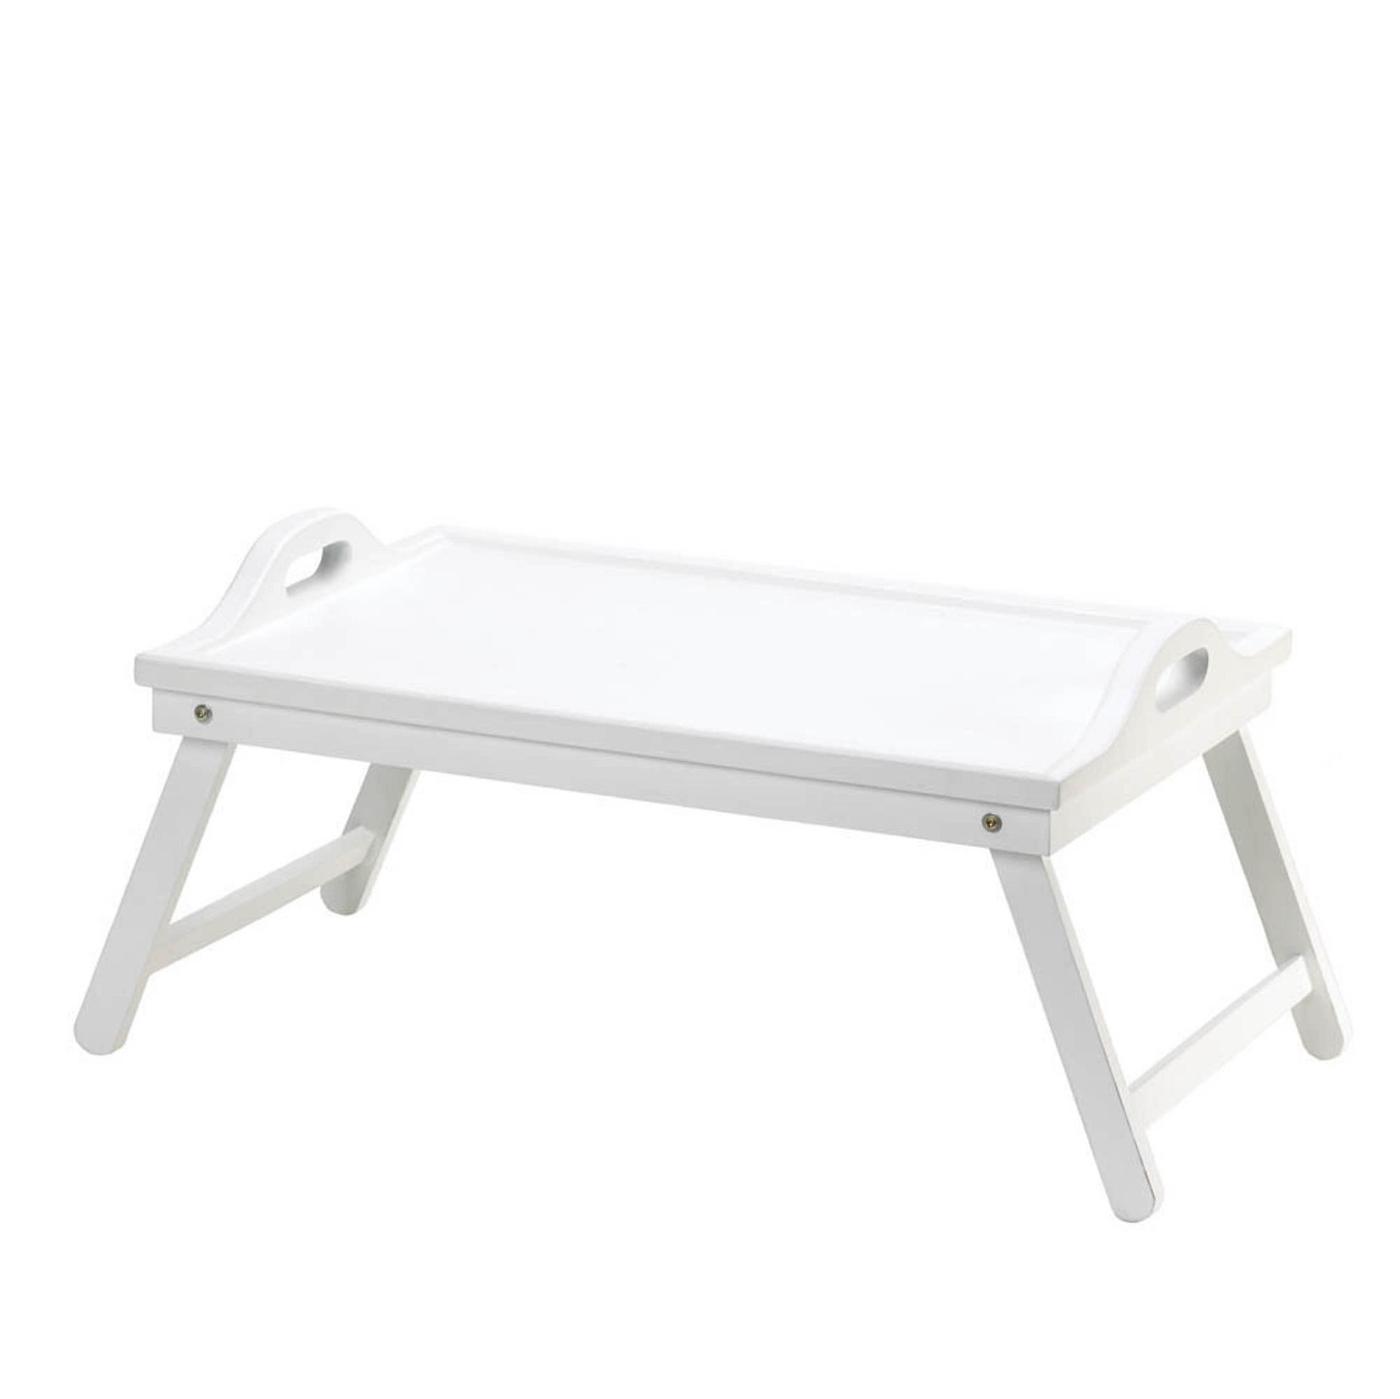 White Folding Tray - $44.46